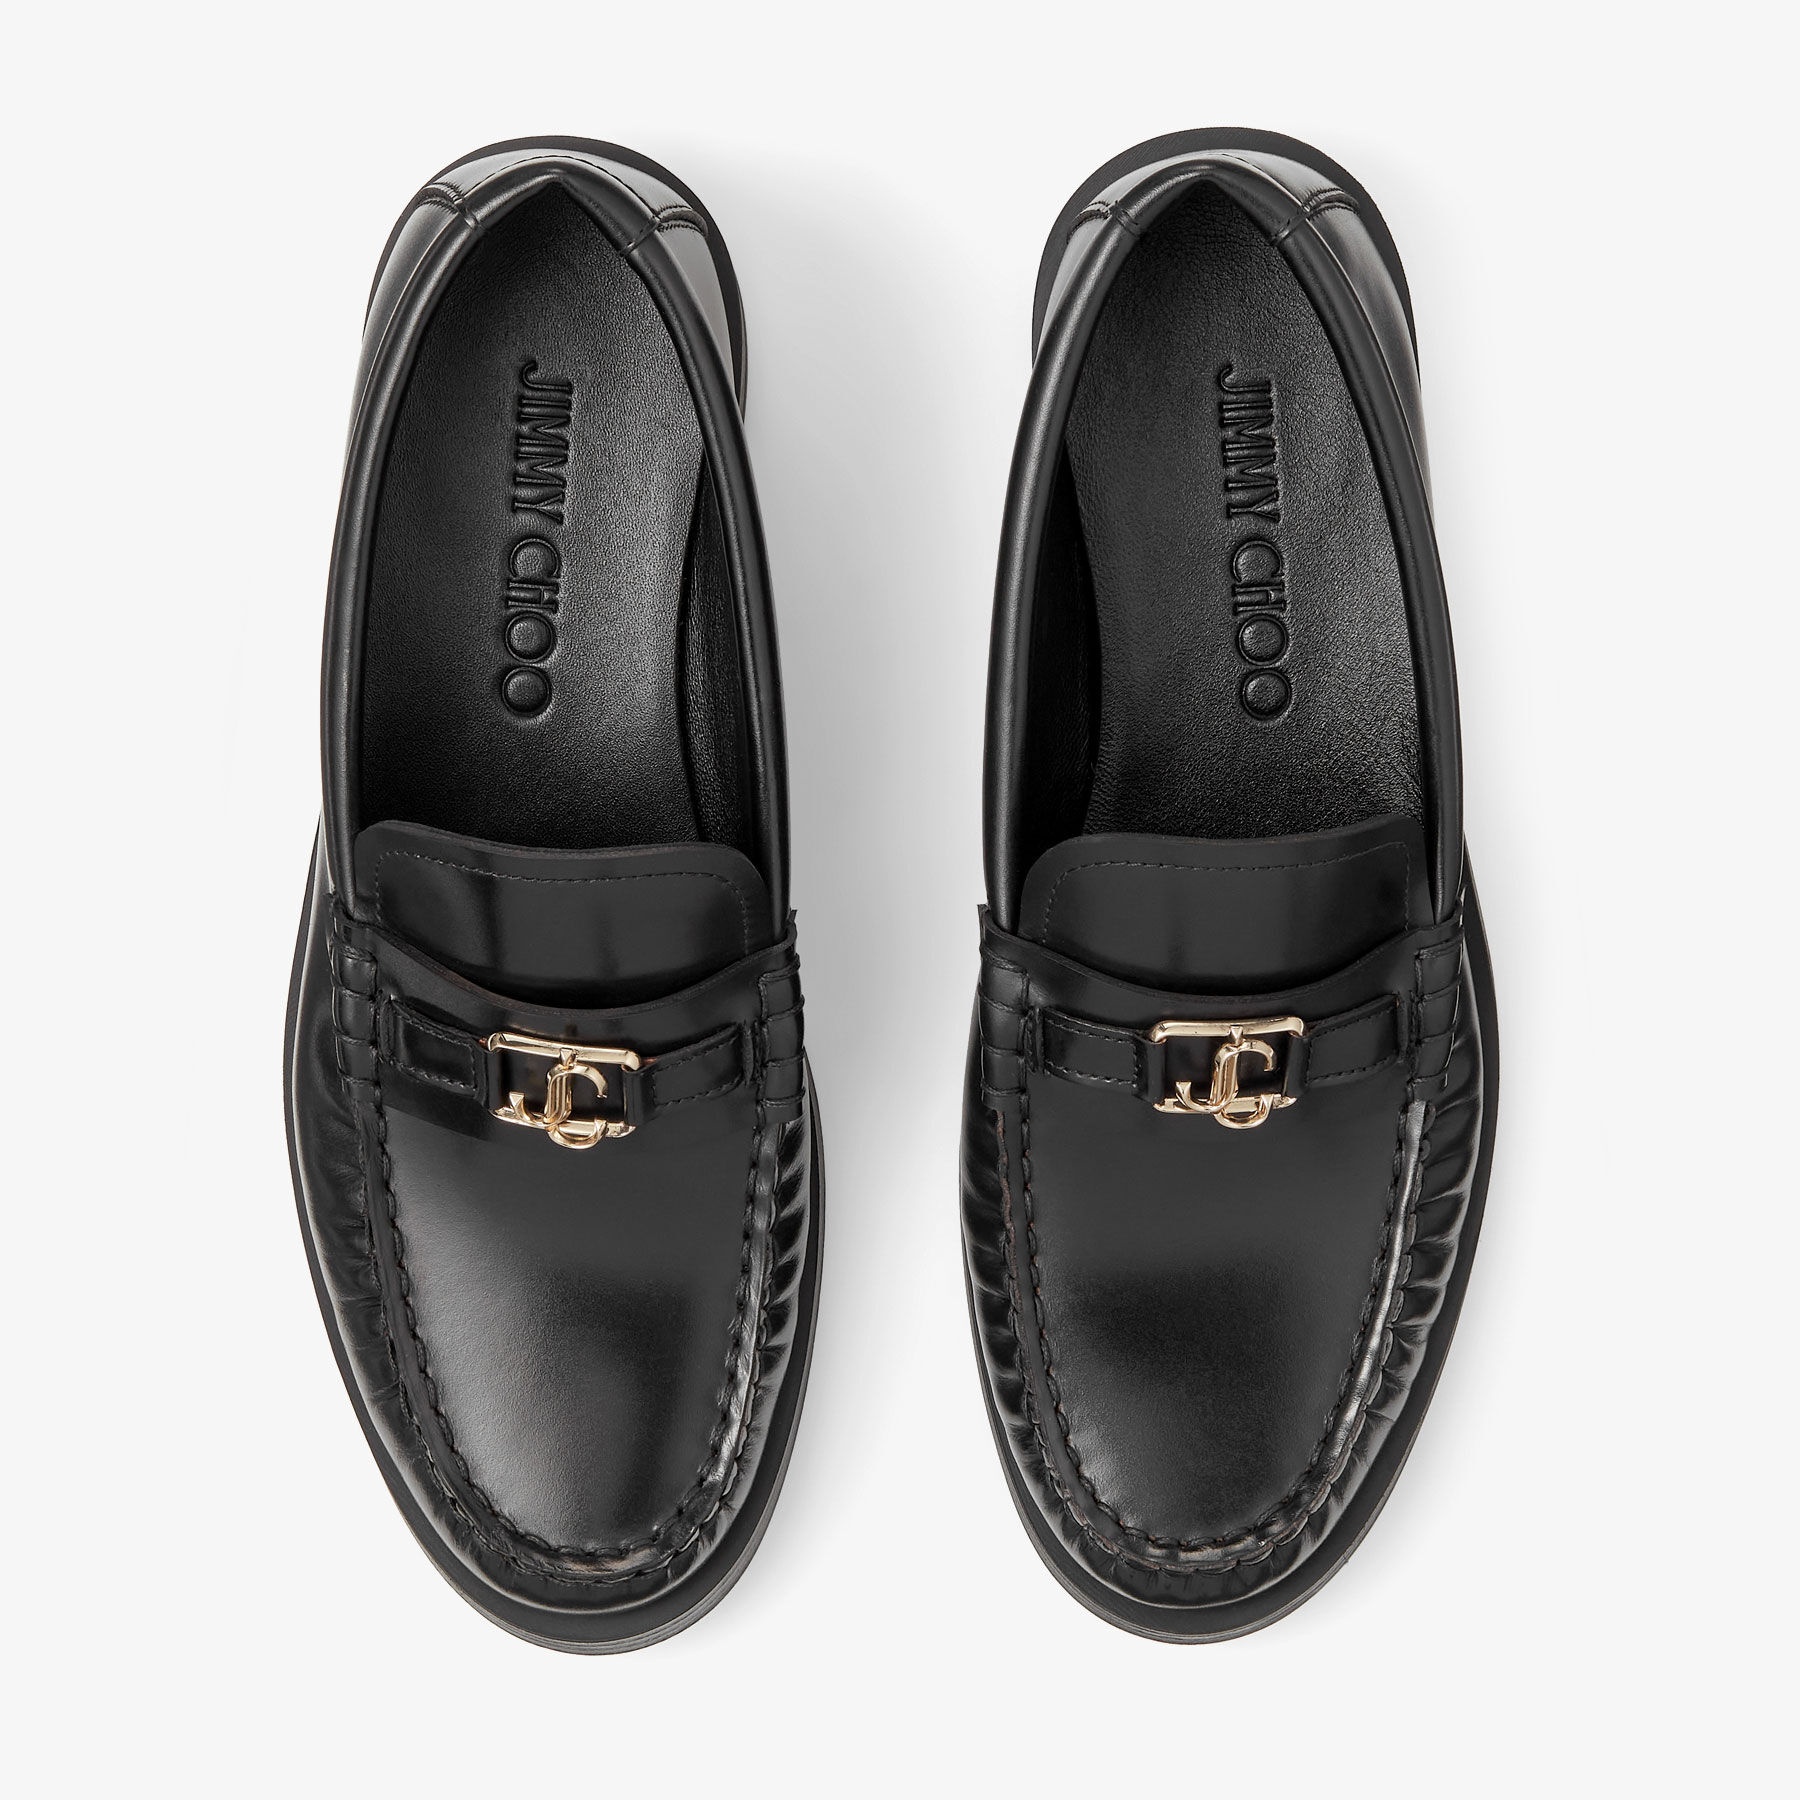 Addie/JC
Black Box Calf Leather Flat Loafers with JC Emblem - 4